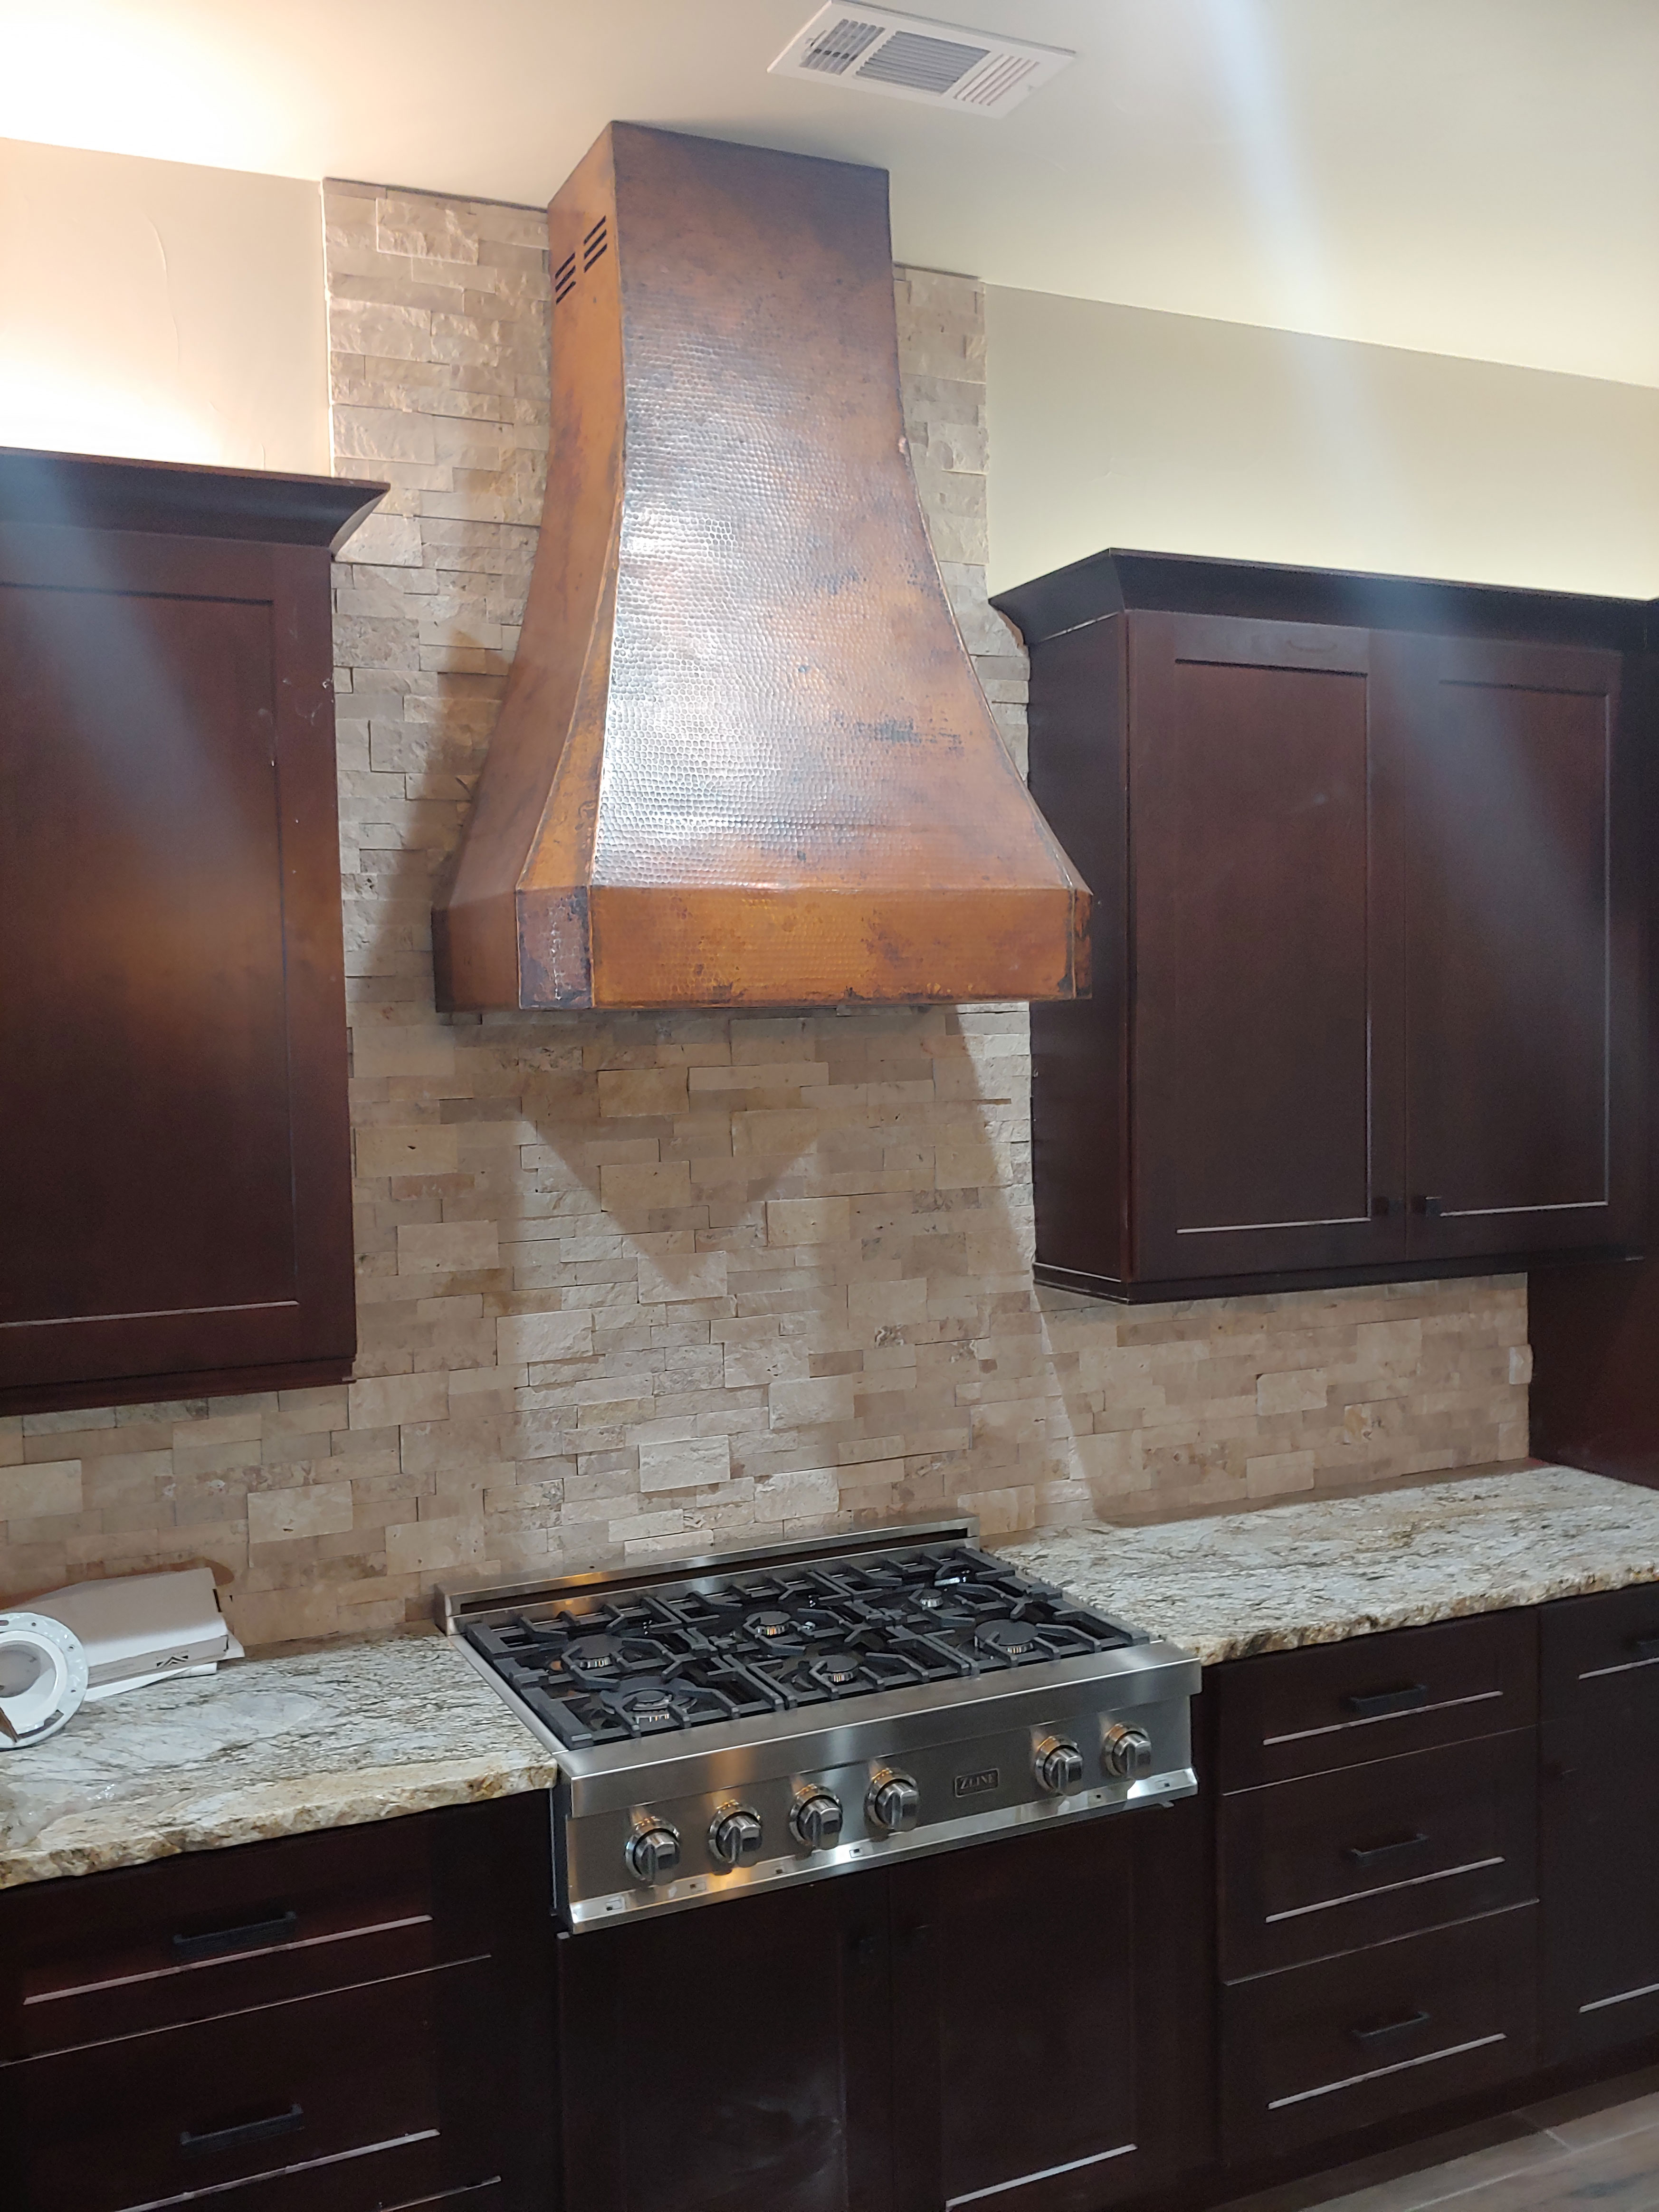 French kitchen design with range hood beautiful brown kitchen cabinet, white kitchen countertops charming brick backsplash